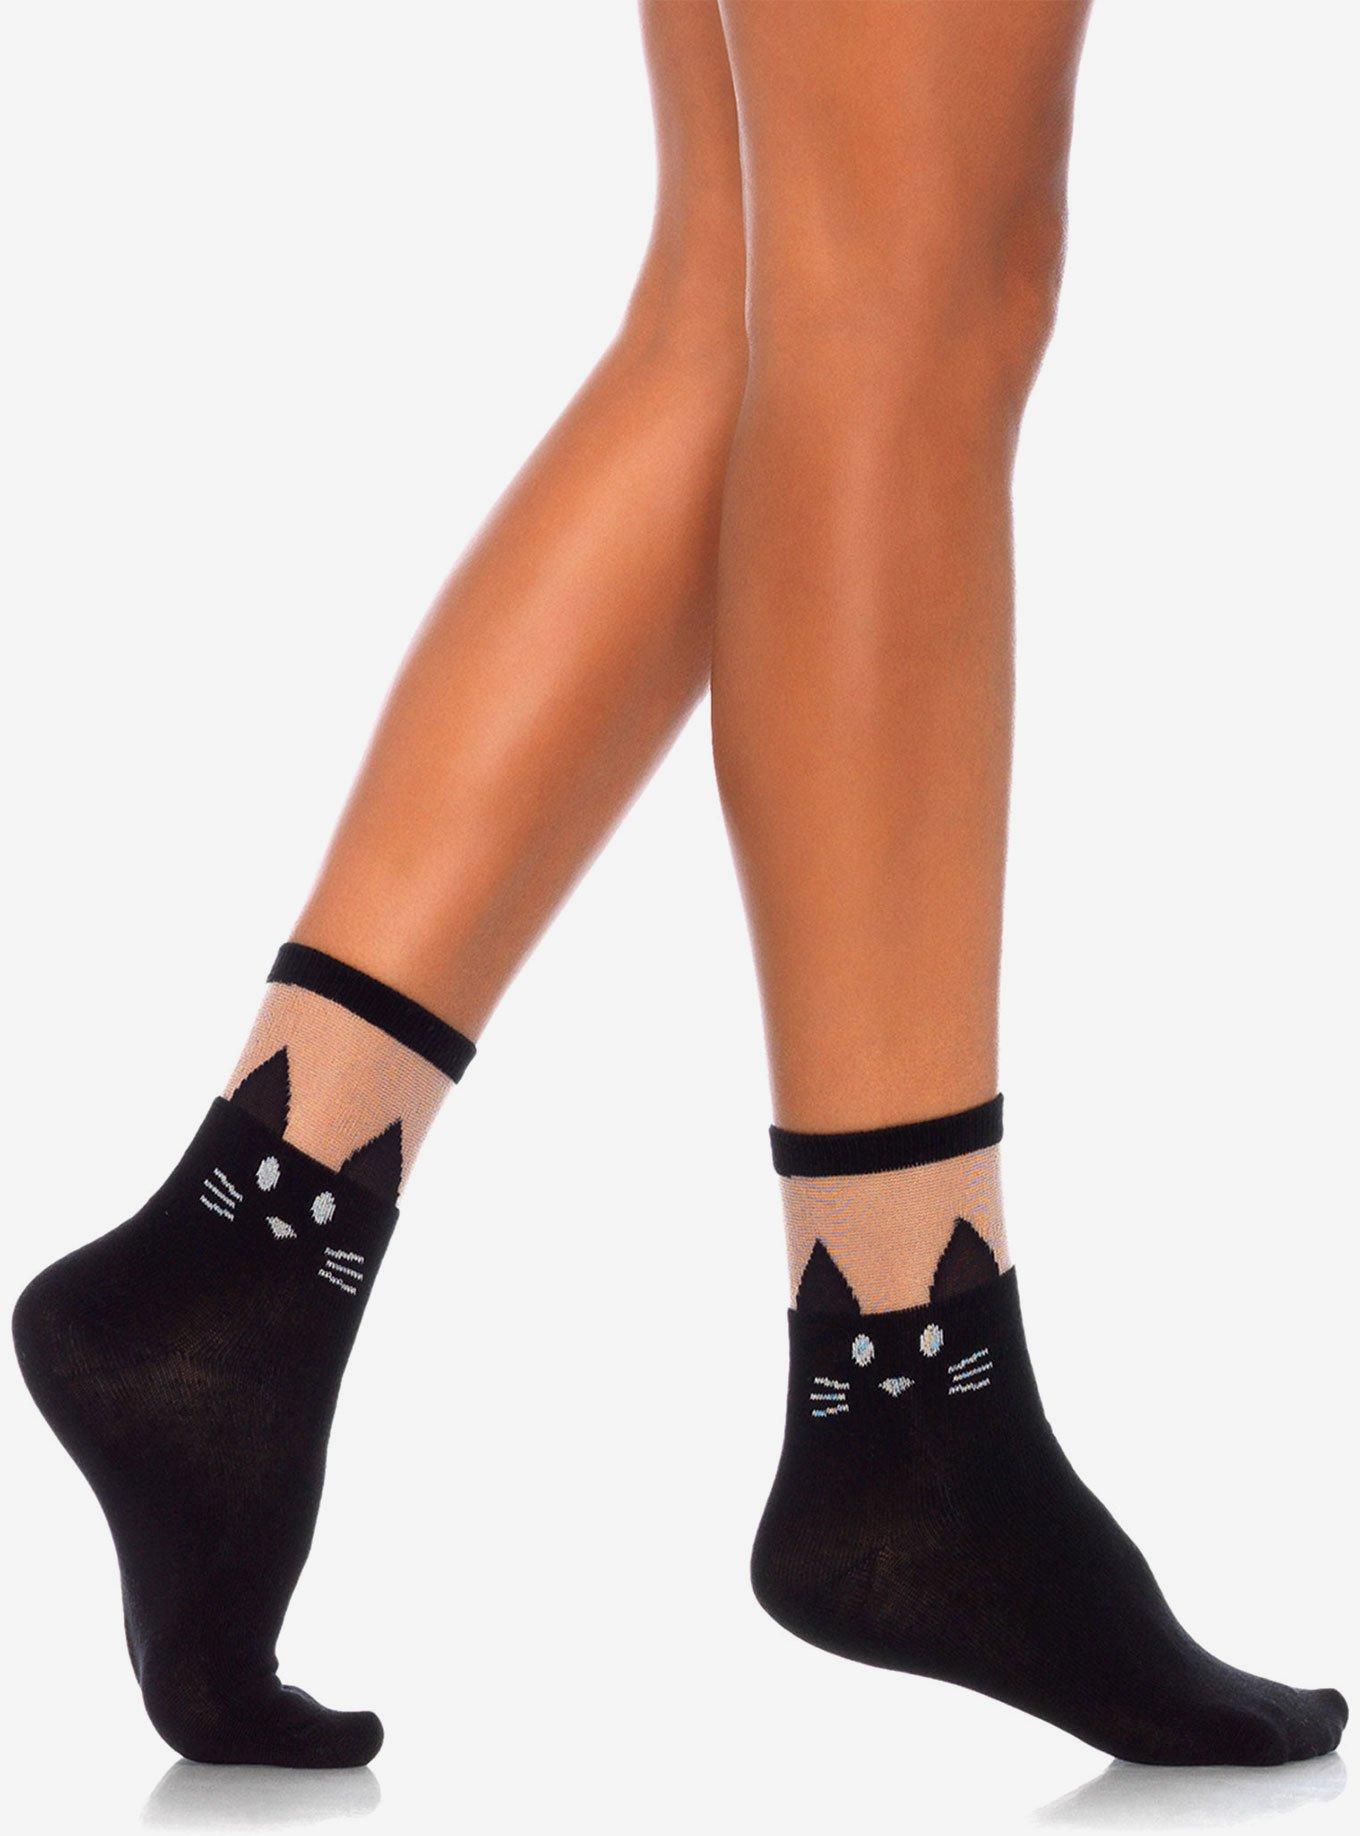 Black Cat Ankle Socks with Sheer Top Black, , hi-res